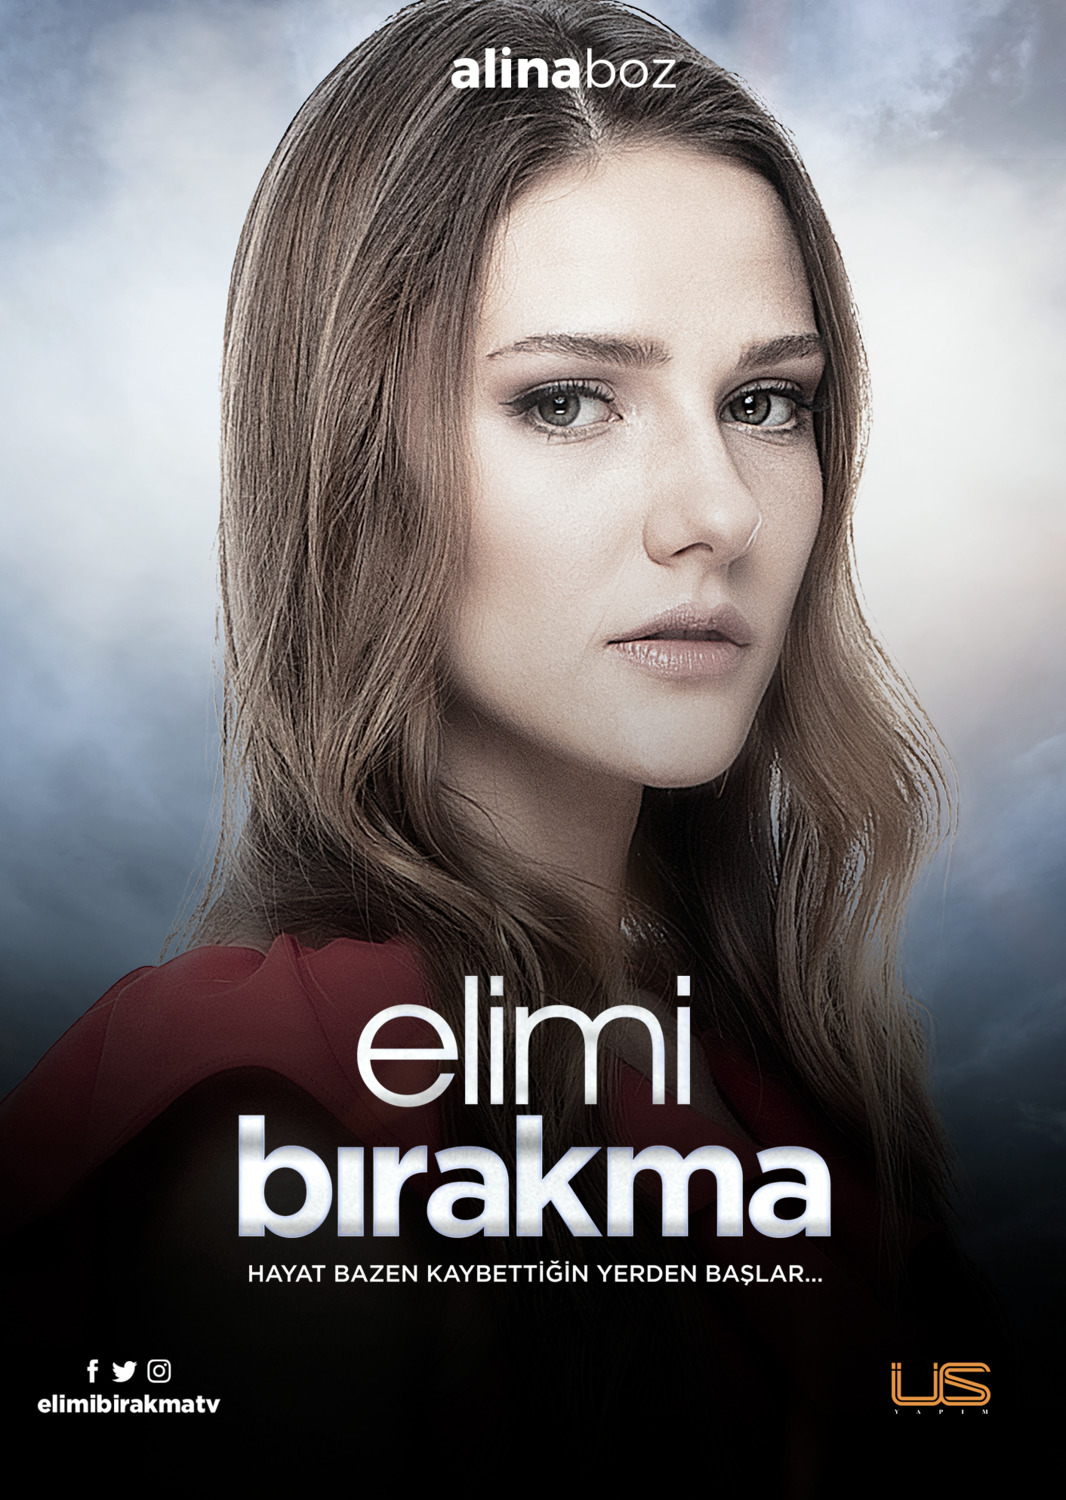 Extra Large TV Poster Image for Elimi birakma (#7 of 20)